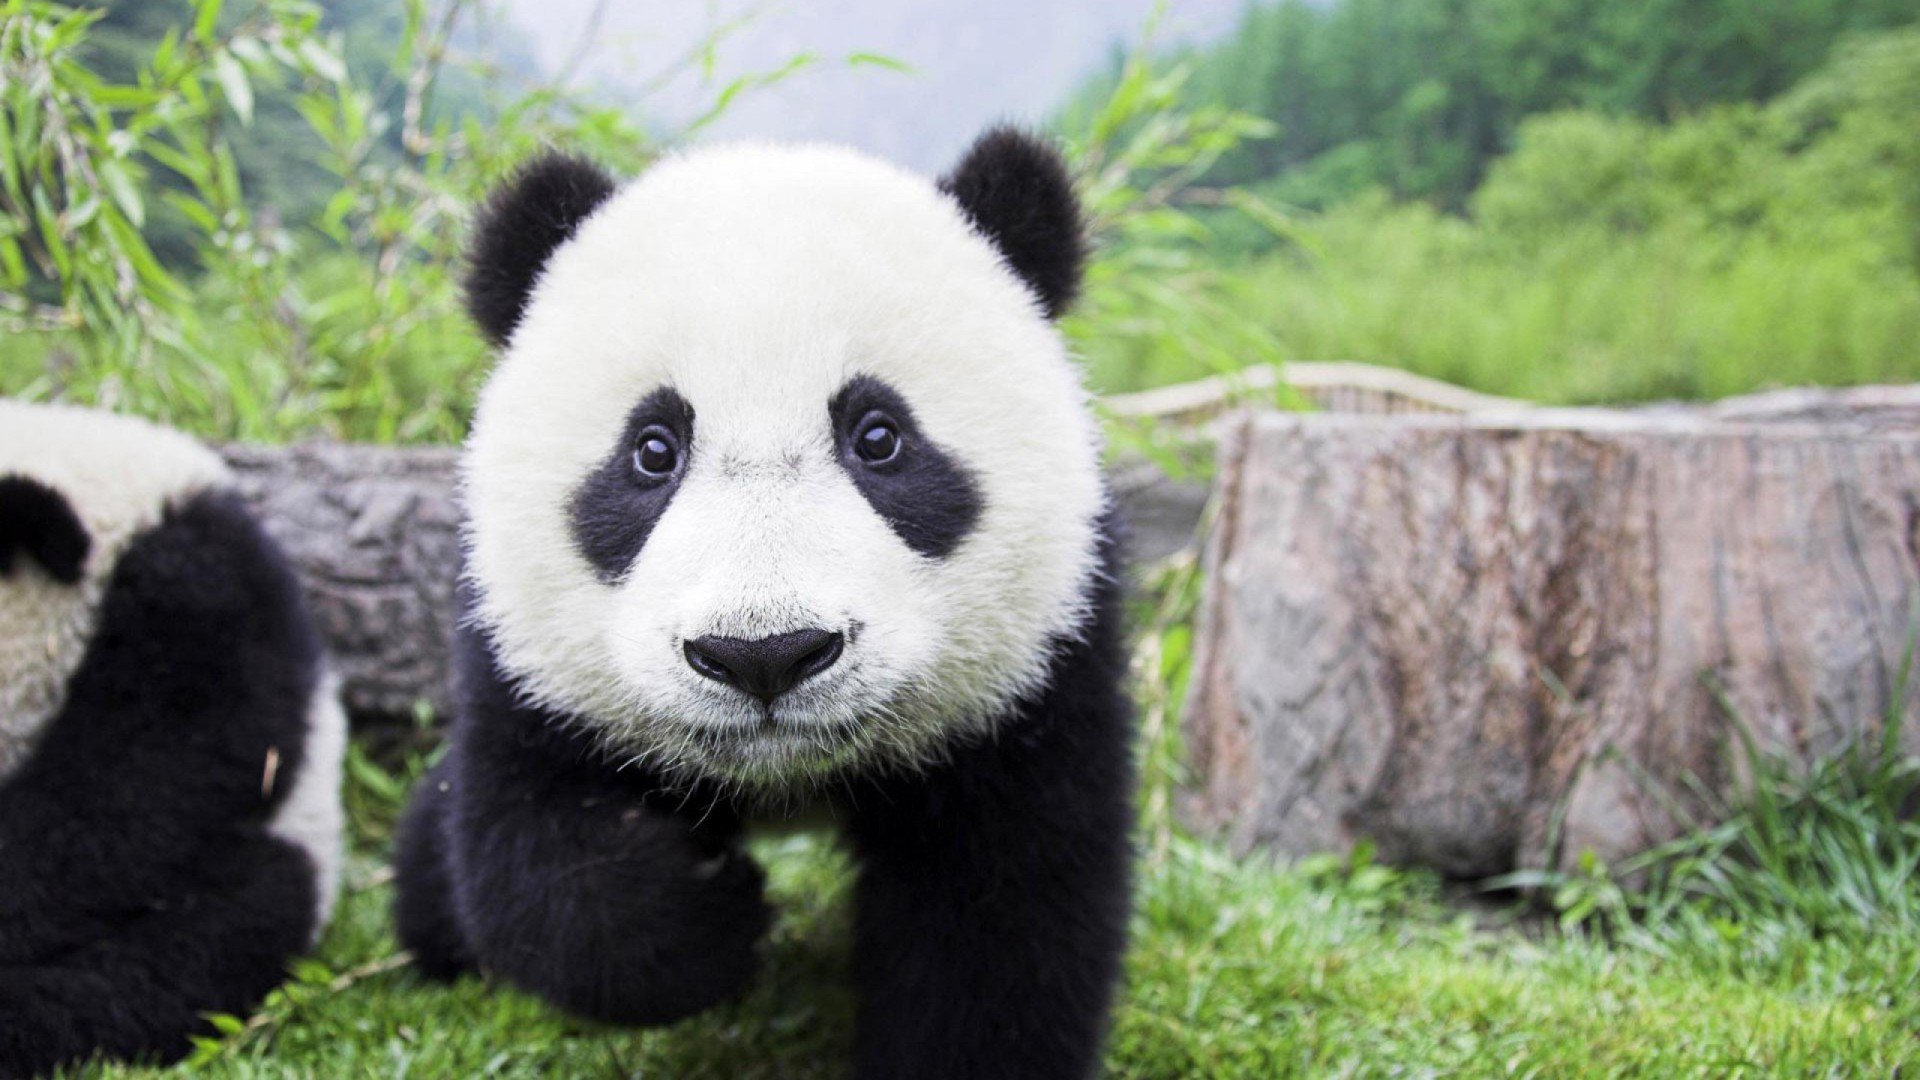 47,814 Panda Face Images, Stock Photos & Vectors | Shutterstock